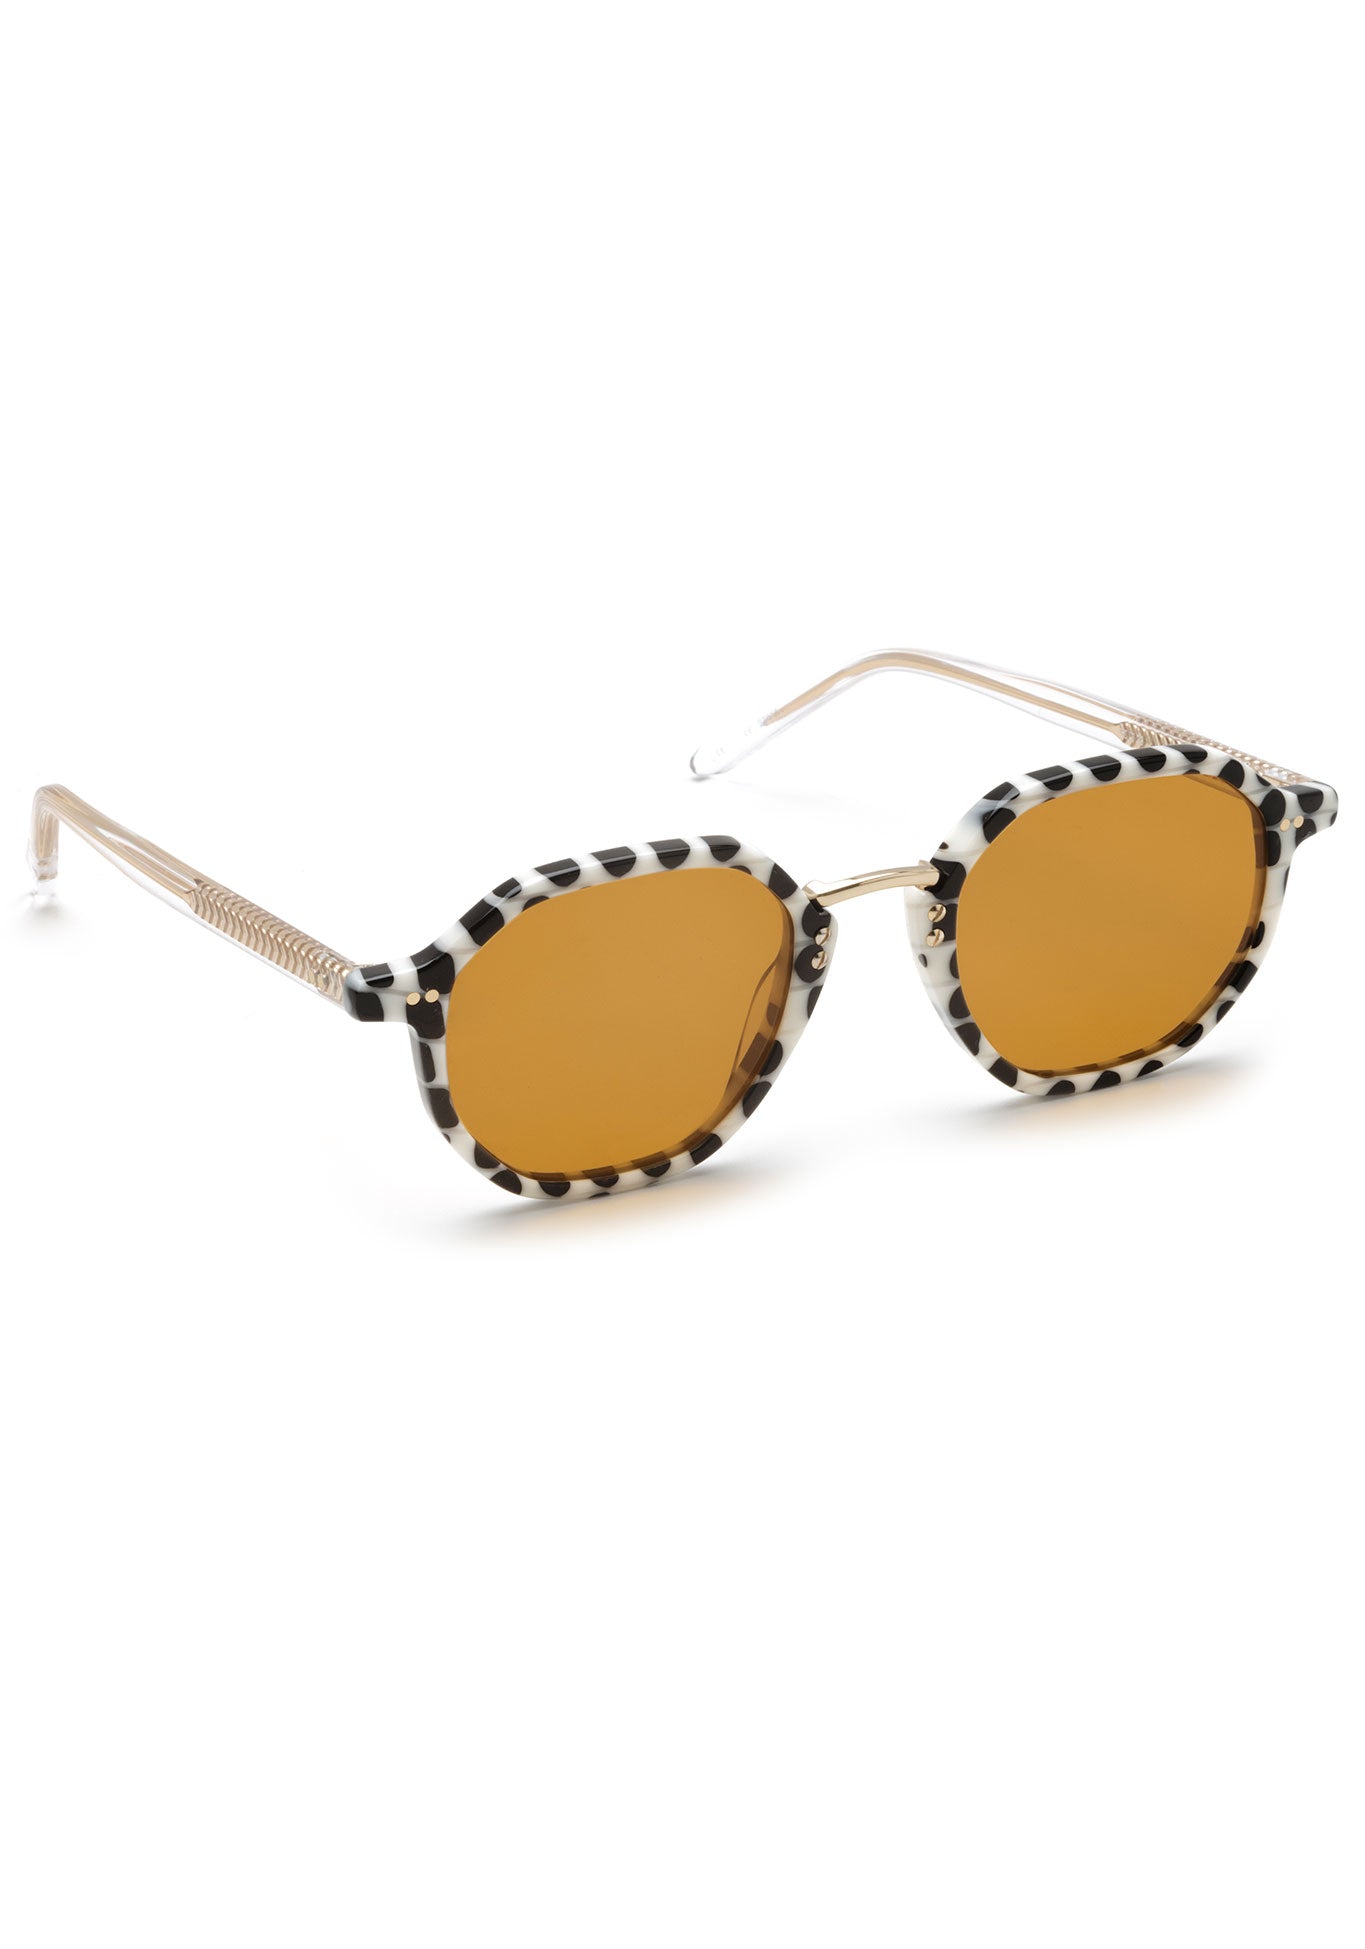 KREWE SUNGLASSES - DAKOTA | Domino + Crystal 12K + Custom Vanity Tint handcrafted, geometic sunglasses with balck and white acetate and amber tinted lenses